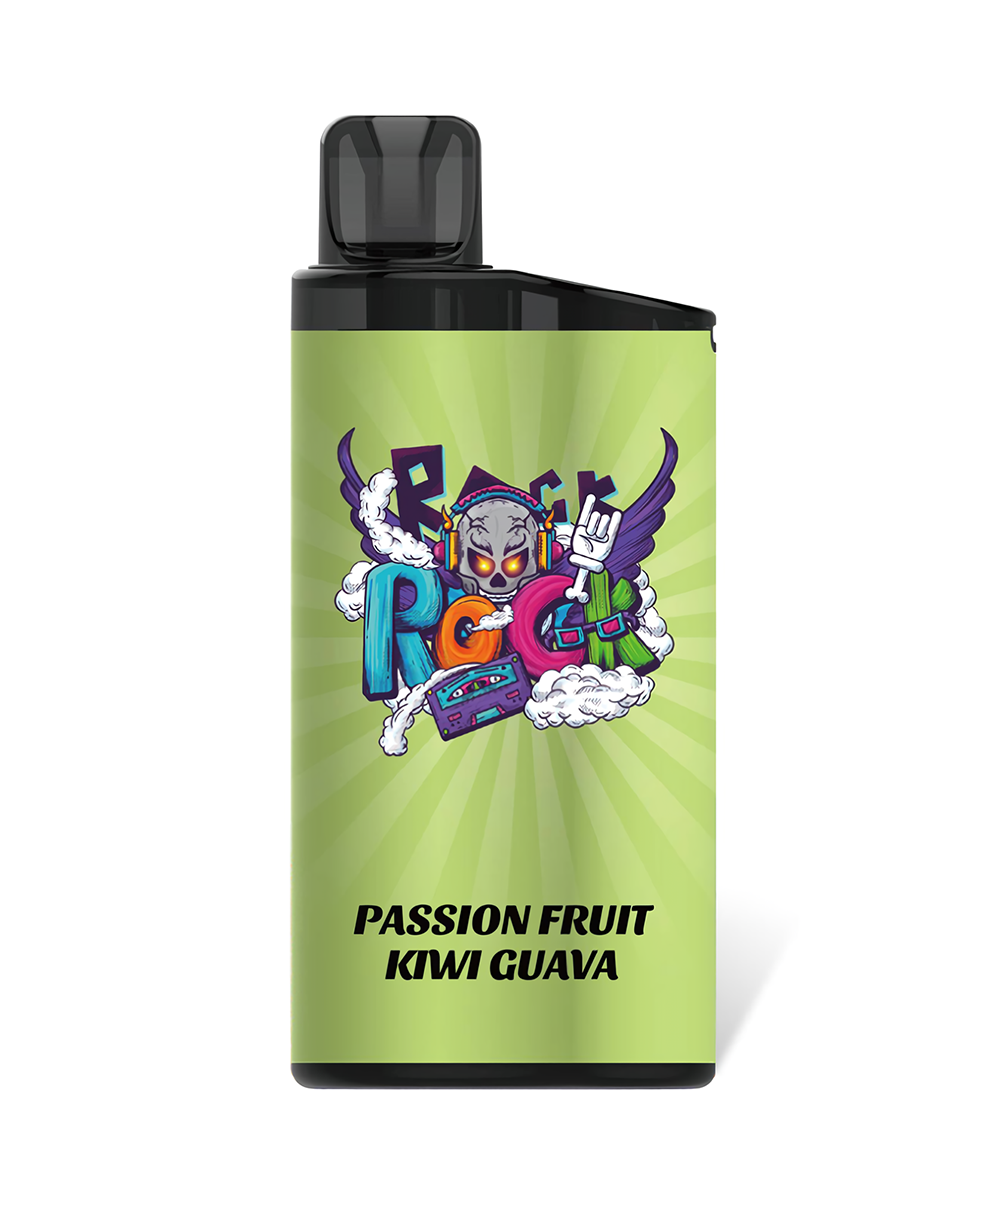 Passion fruit kiwi guava